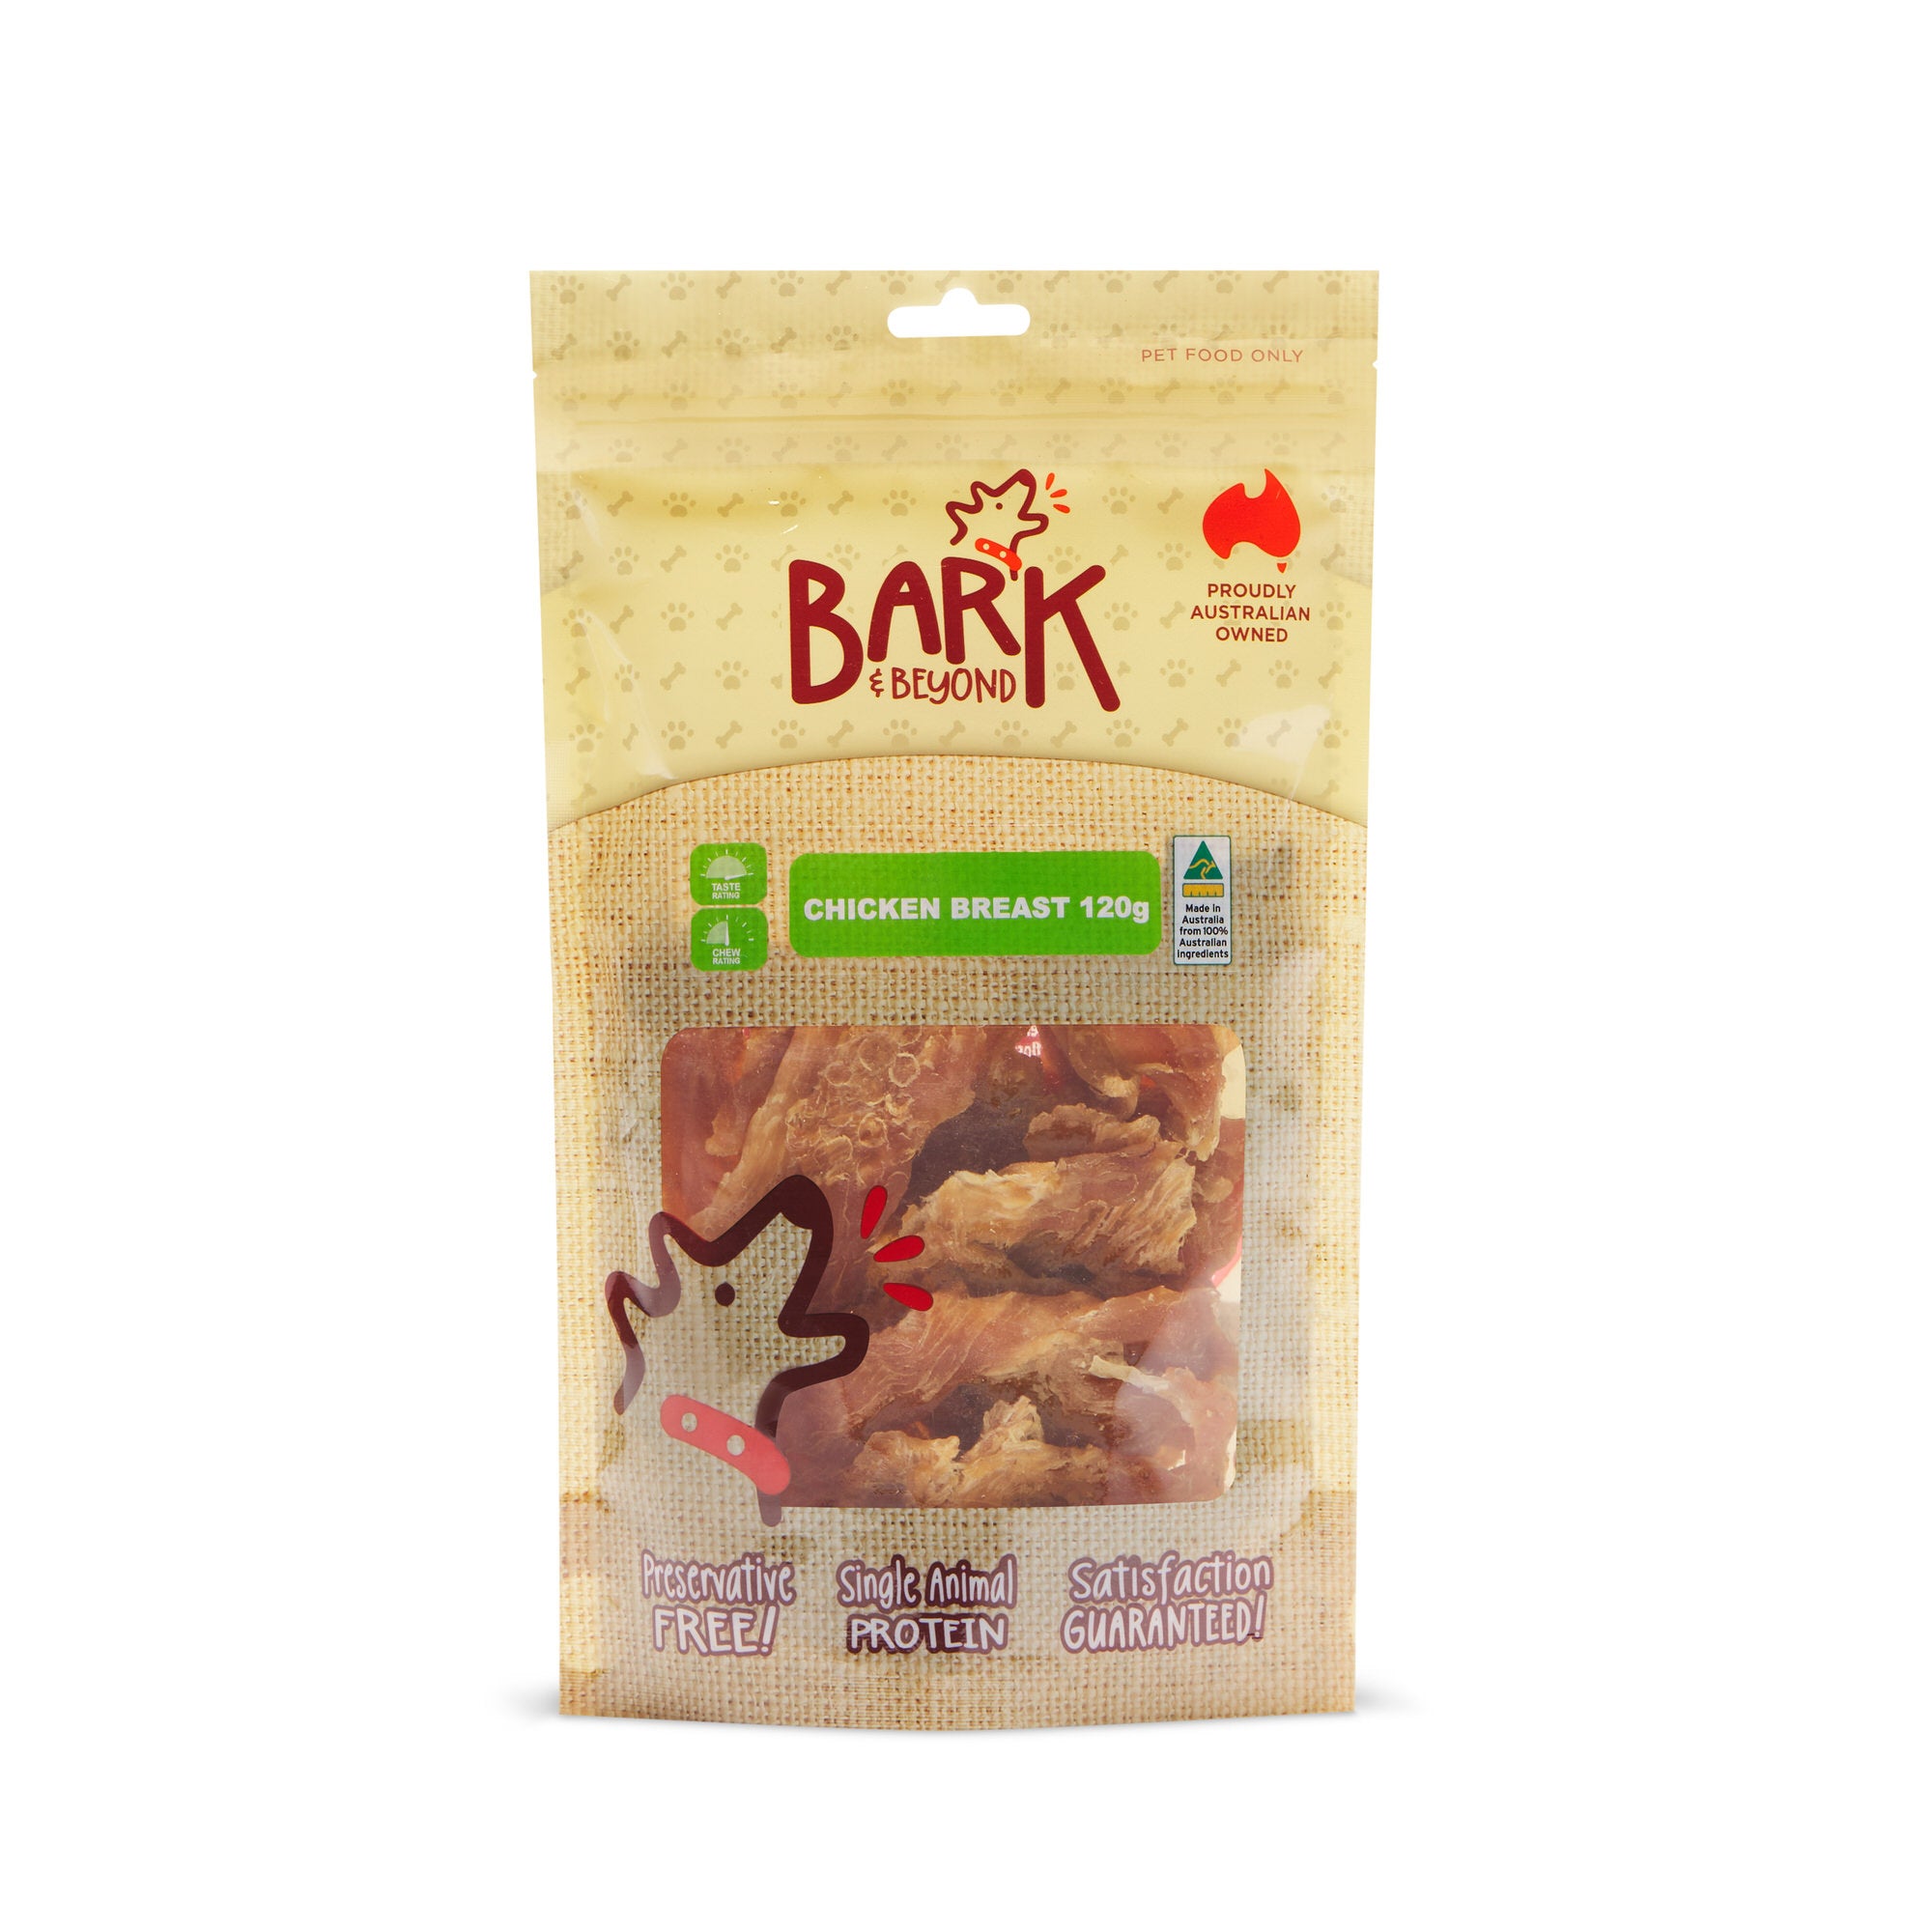 Bark and Beyond Chicken Breast 120g | Pet Food Leaders